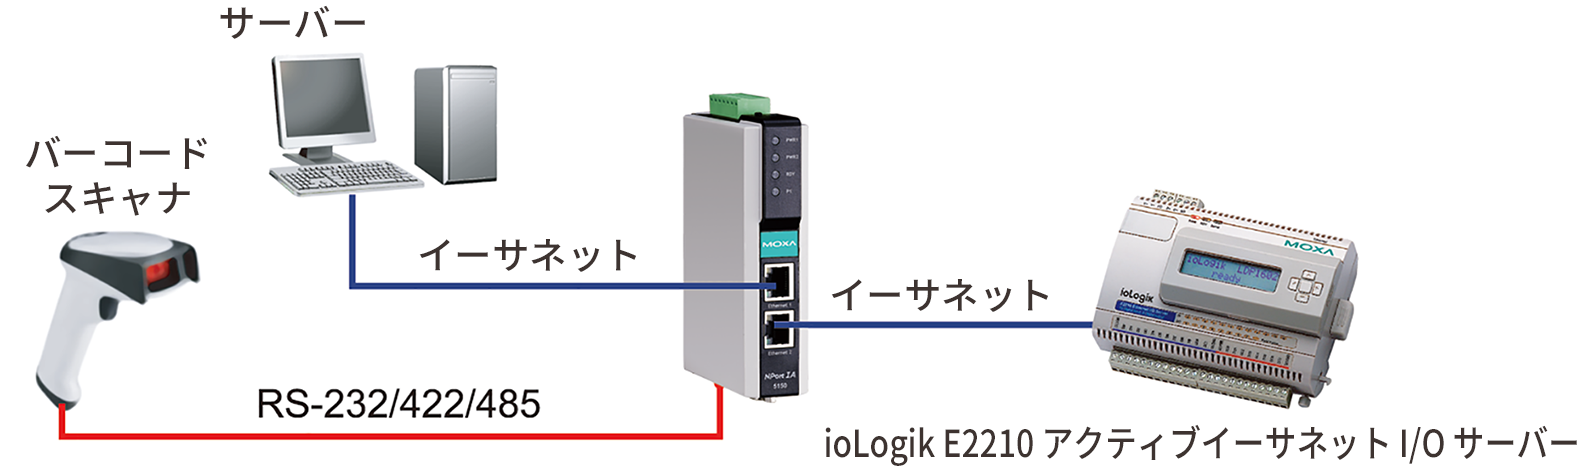 NPort IA5000シリーズ - 産業用デバイスサーバー | MOXA